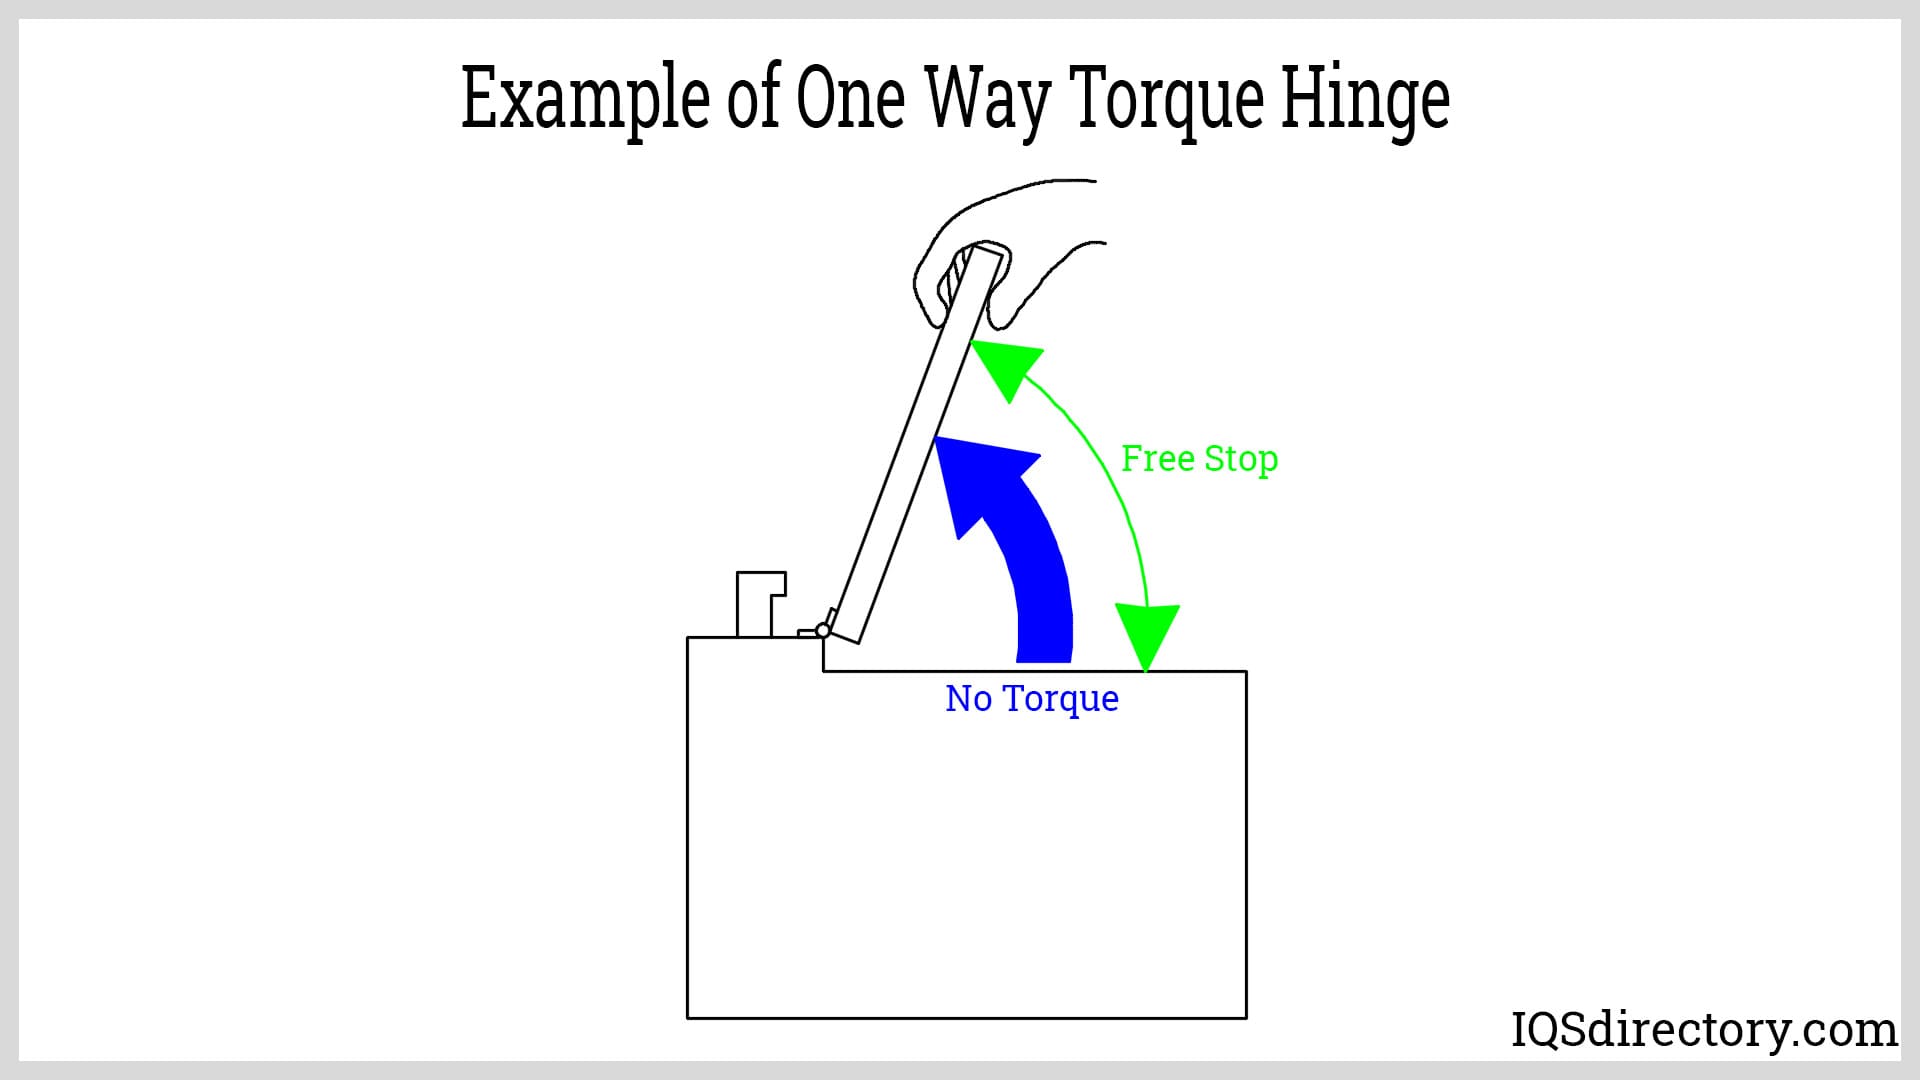 Example of One Way Torque Hinge